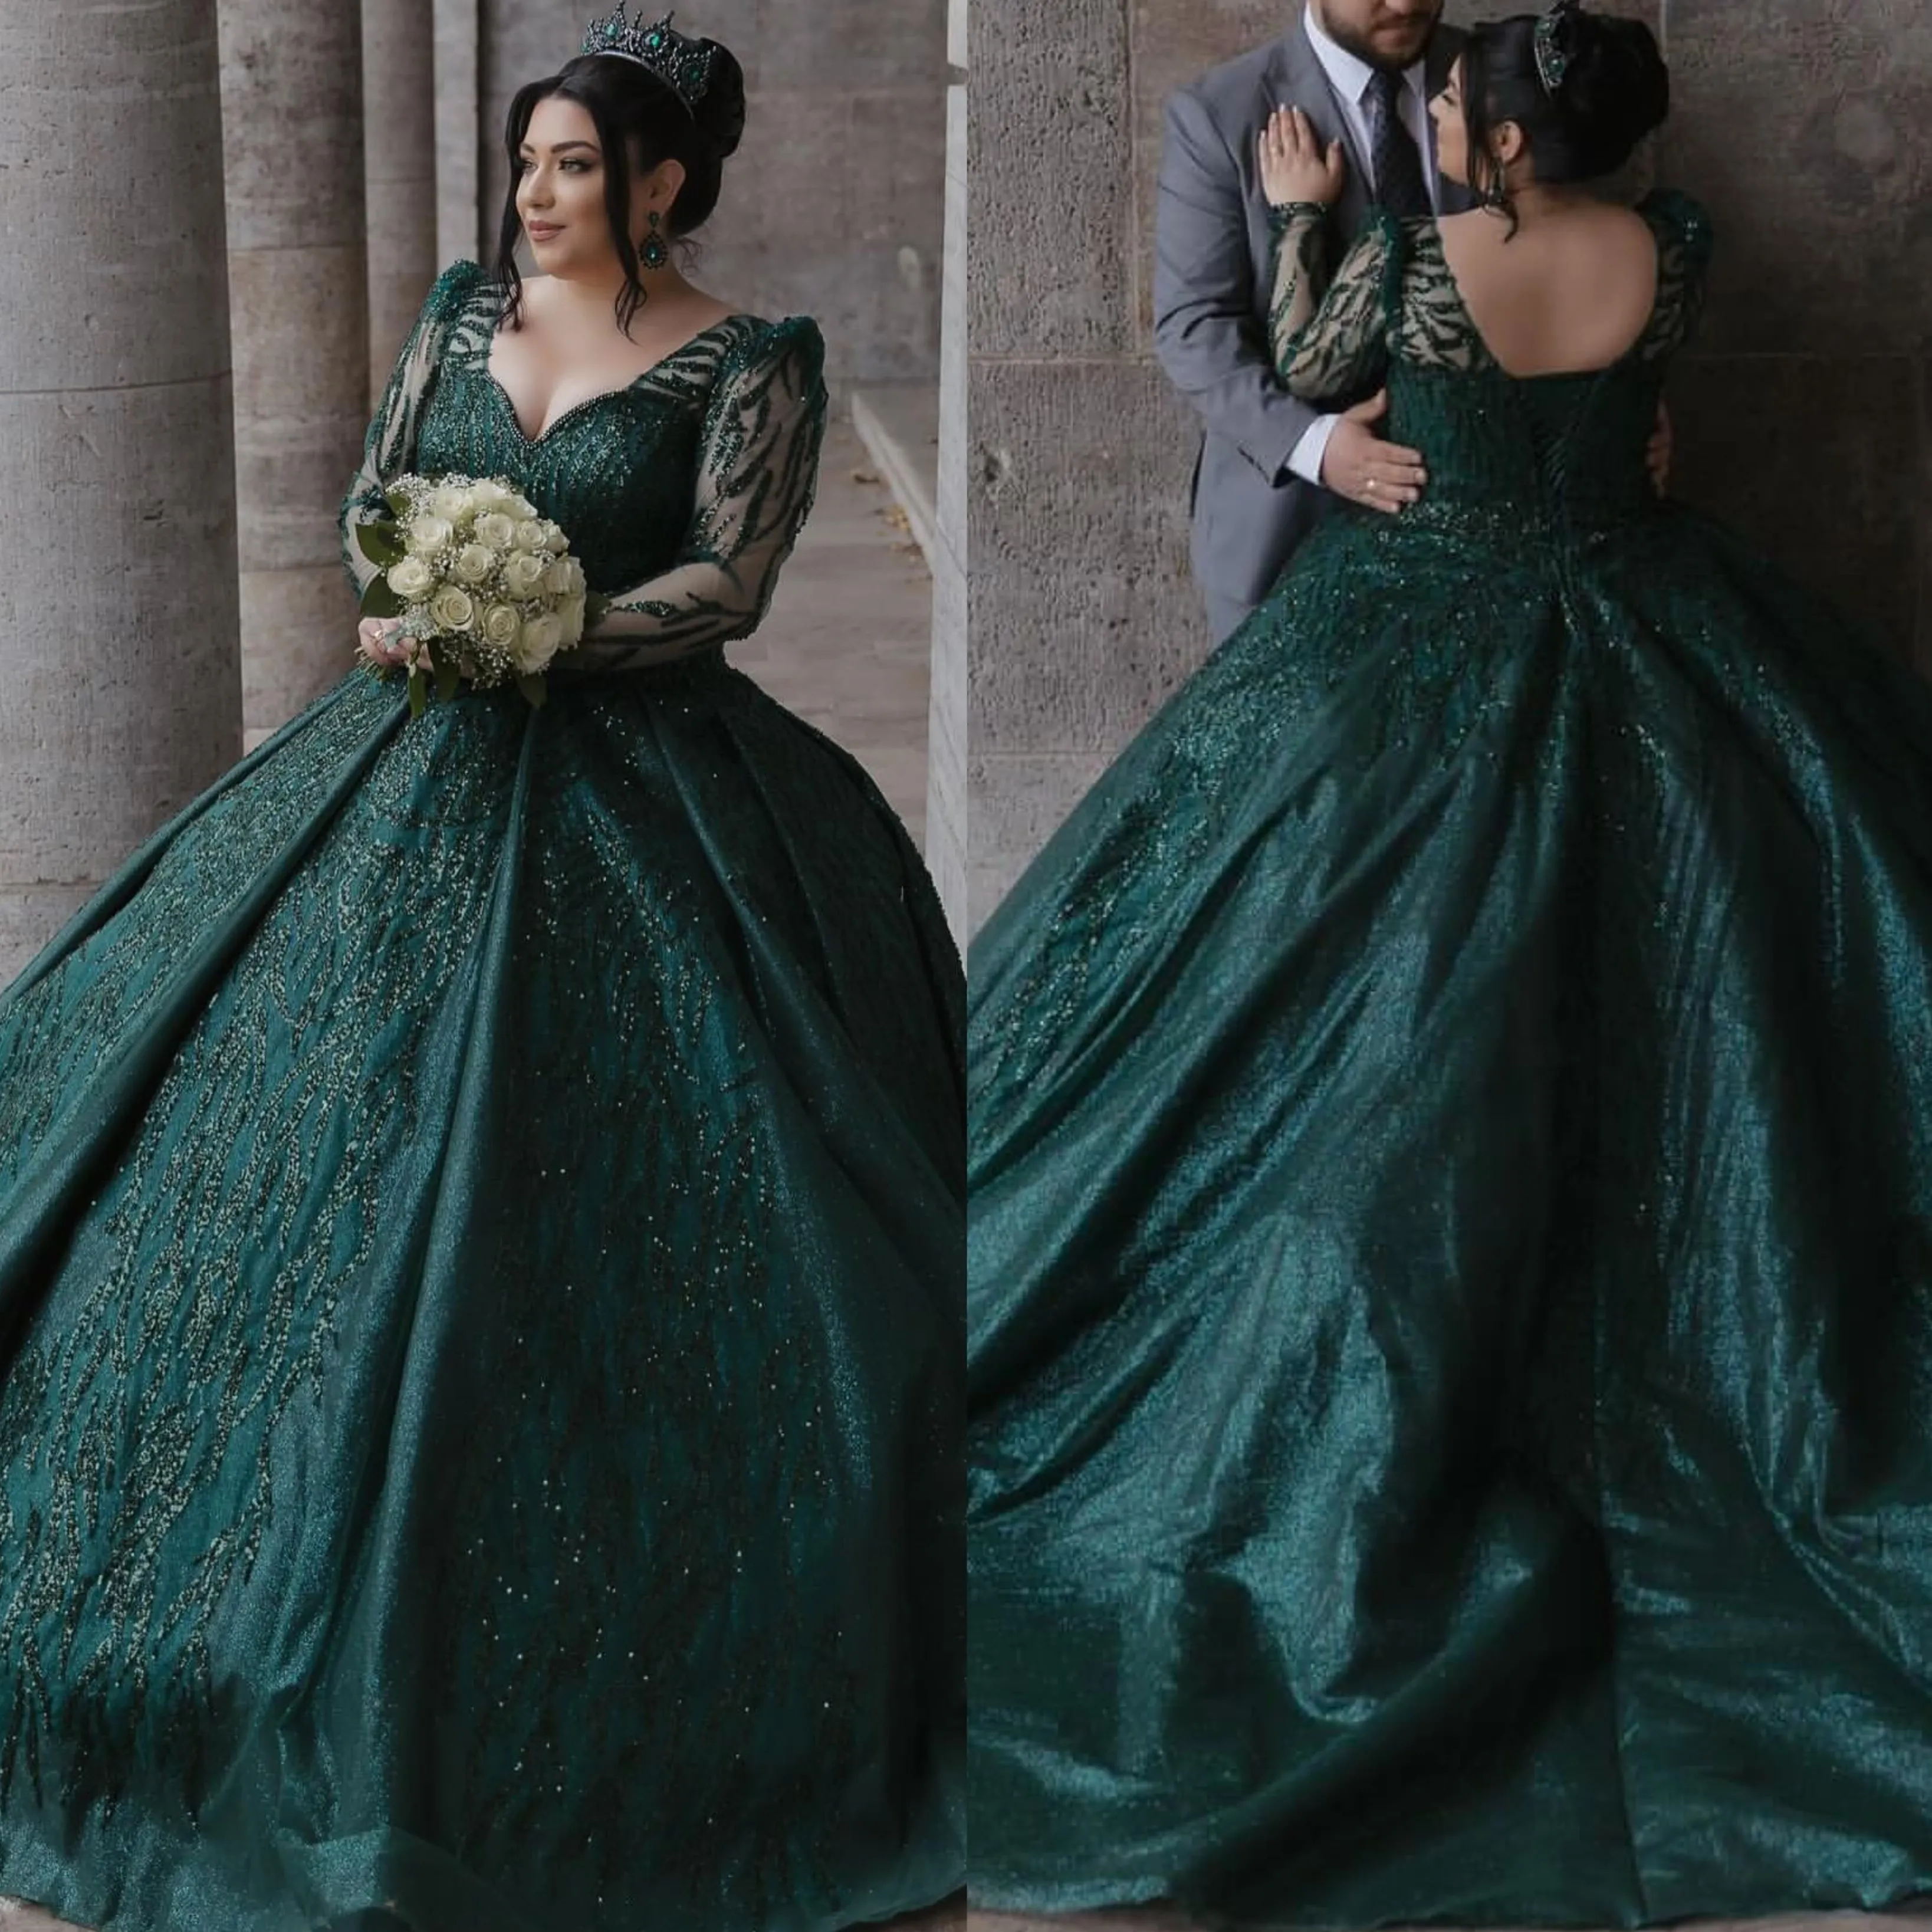 Ball Dark Green Gown Wedding Dress V Neck Beading Sequins Illusion Long Sleeves Wedding Dresses Bridal Gowns Ruffles Dubai Saudi Arabic Bride Dress es s